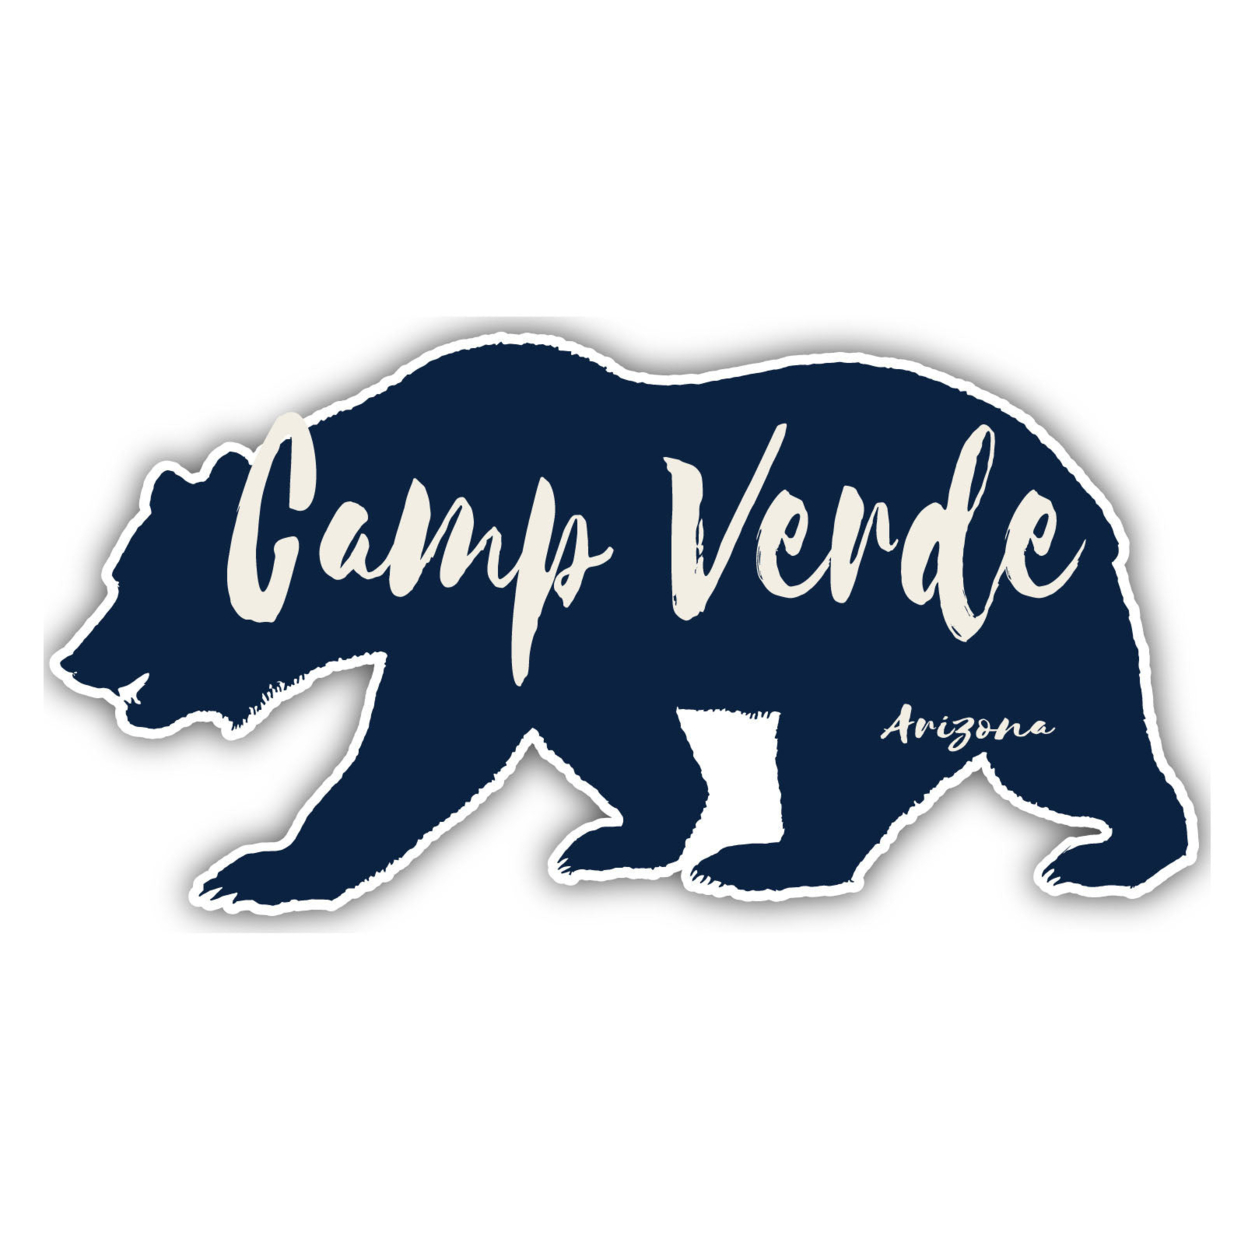 Camp Verde Arizona Souvenir Decorative Stickers (Choose Theme And Size) - Single Unit, 4-Inch, Bear